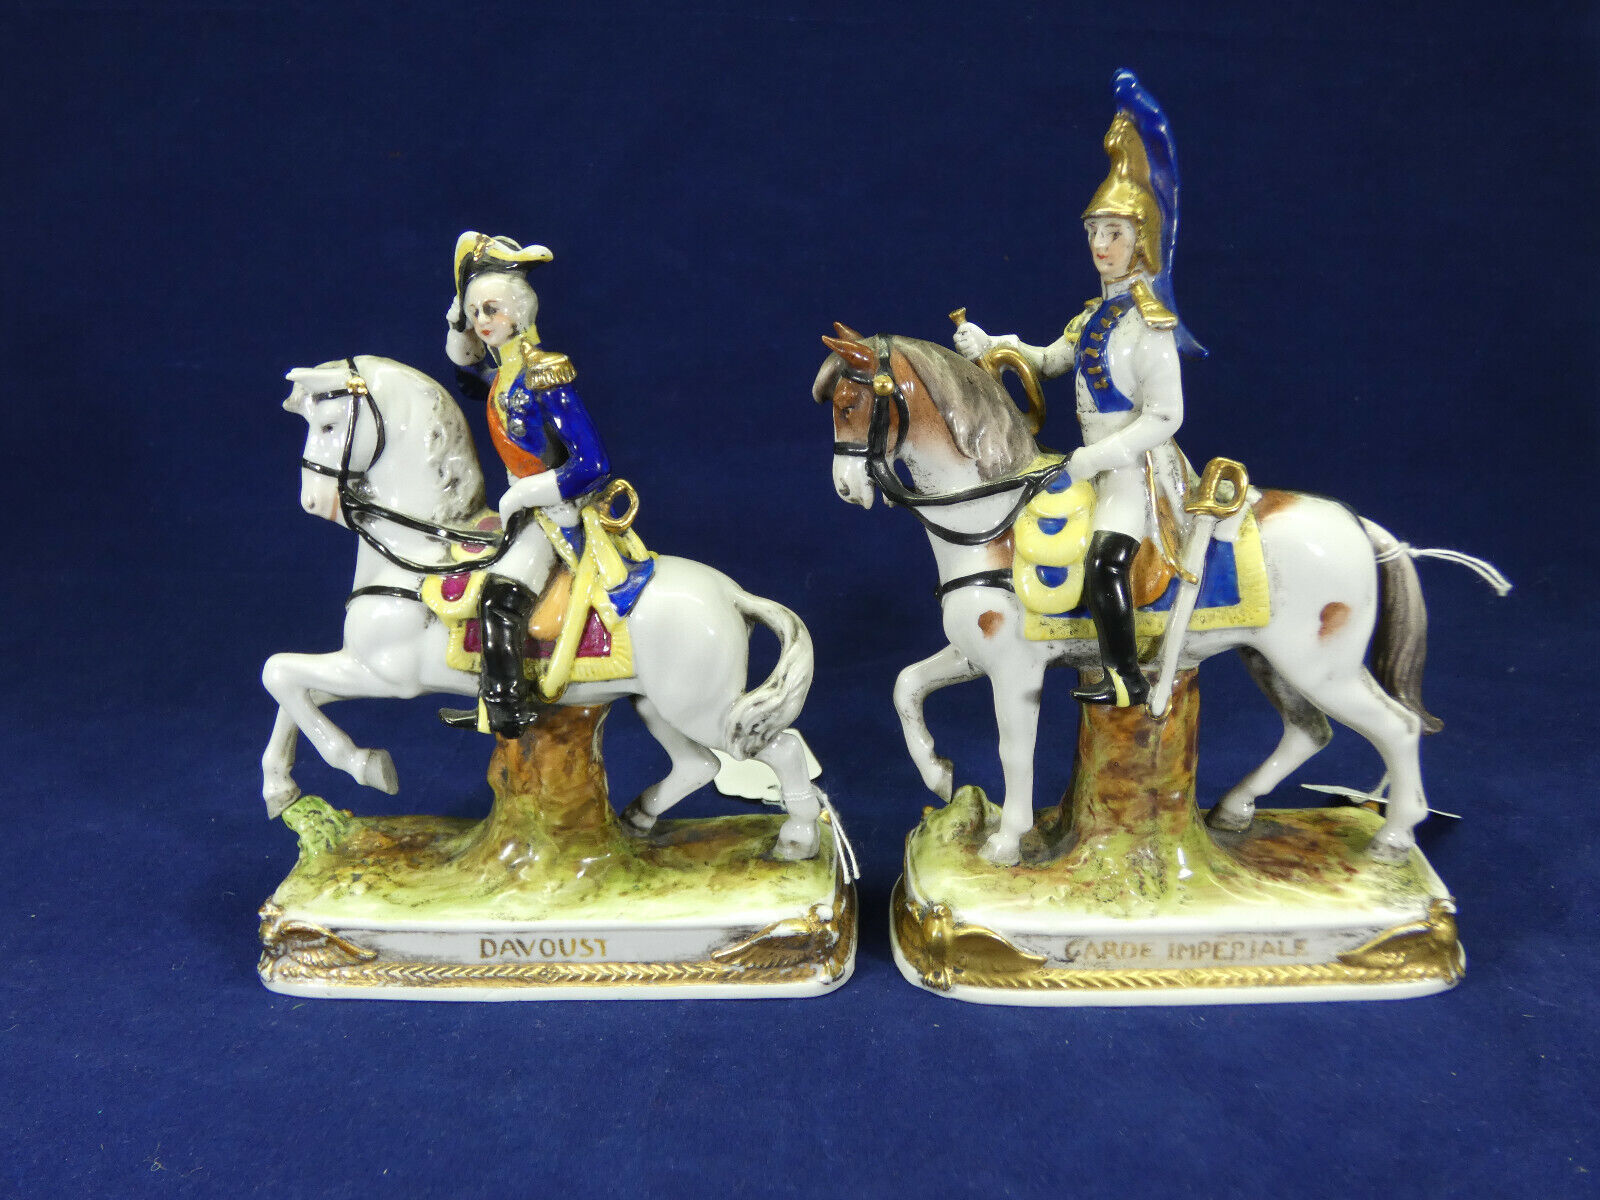 Scheibe-Alsbach Davoust Garde Imperiale Horse Figurines